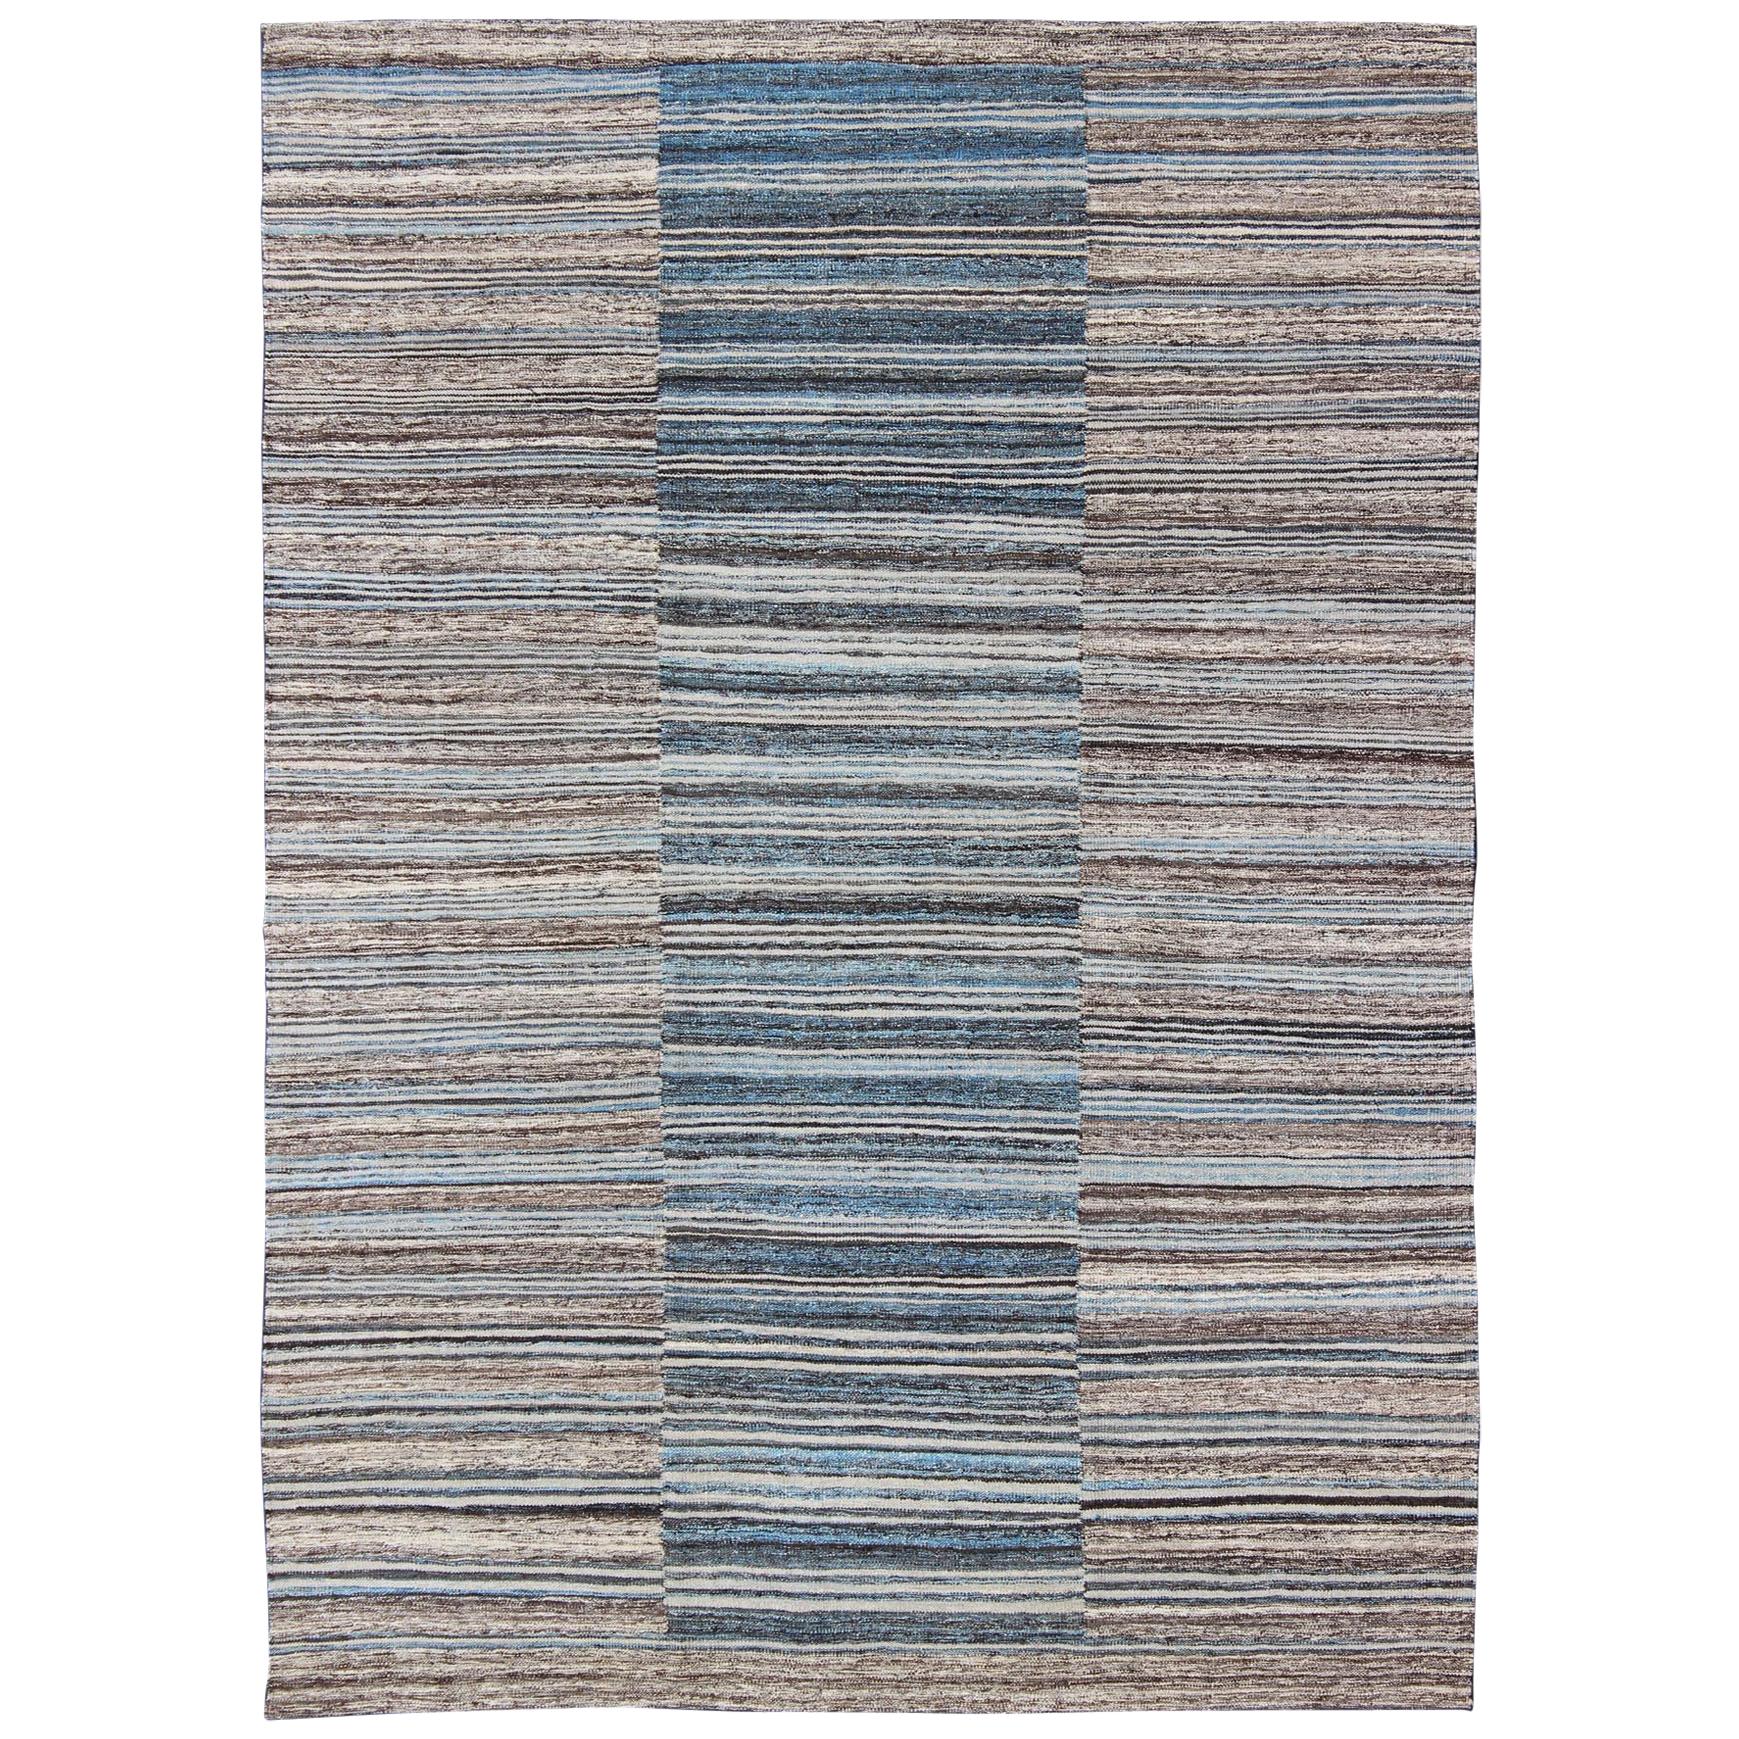 Flat-Weave Kilim Rug with Classic Stripe Design in Blue, Cream, Brown